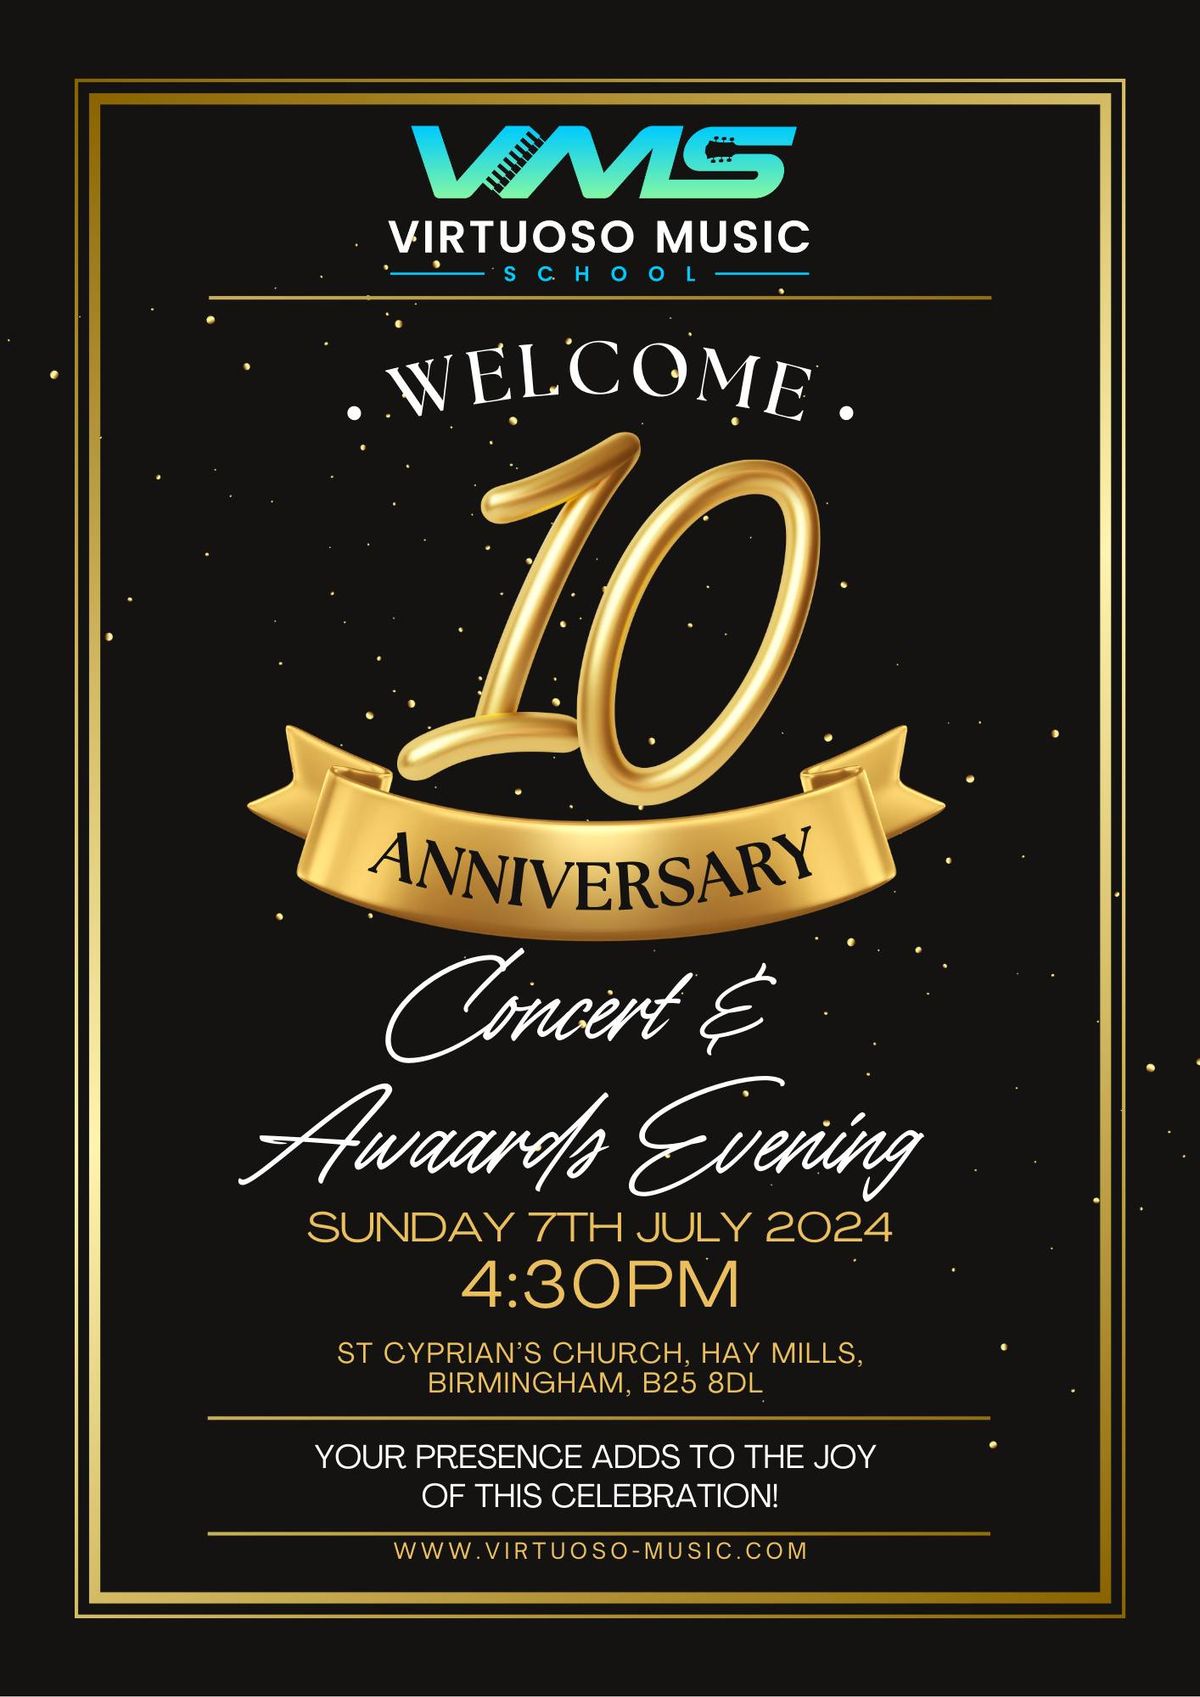 Virtuoso Music School 10 Year Anniversary Concert & Awards Evening